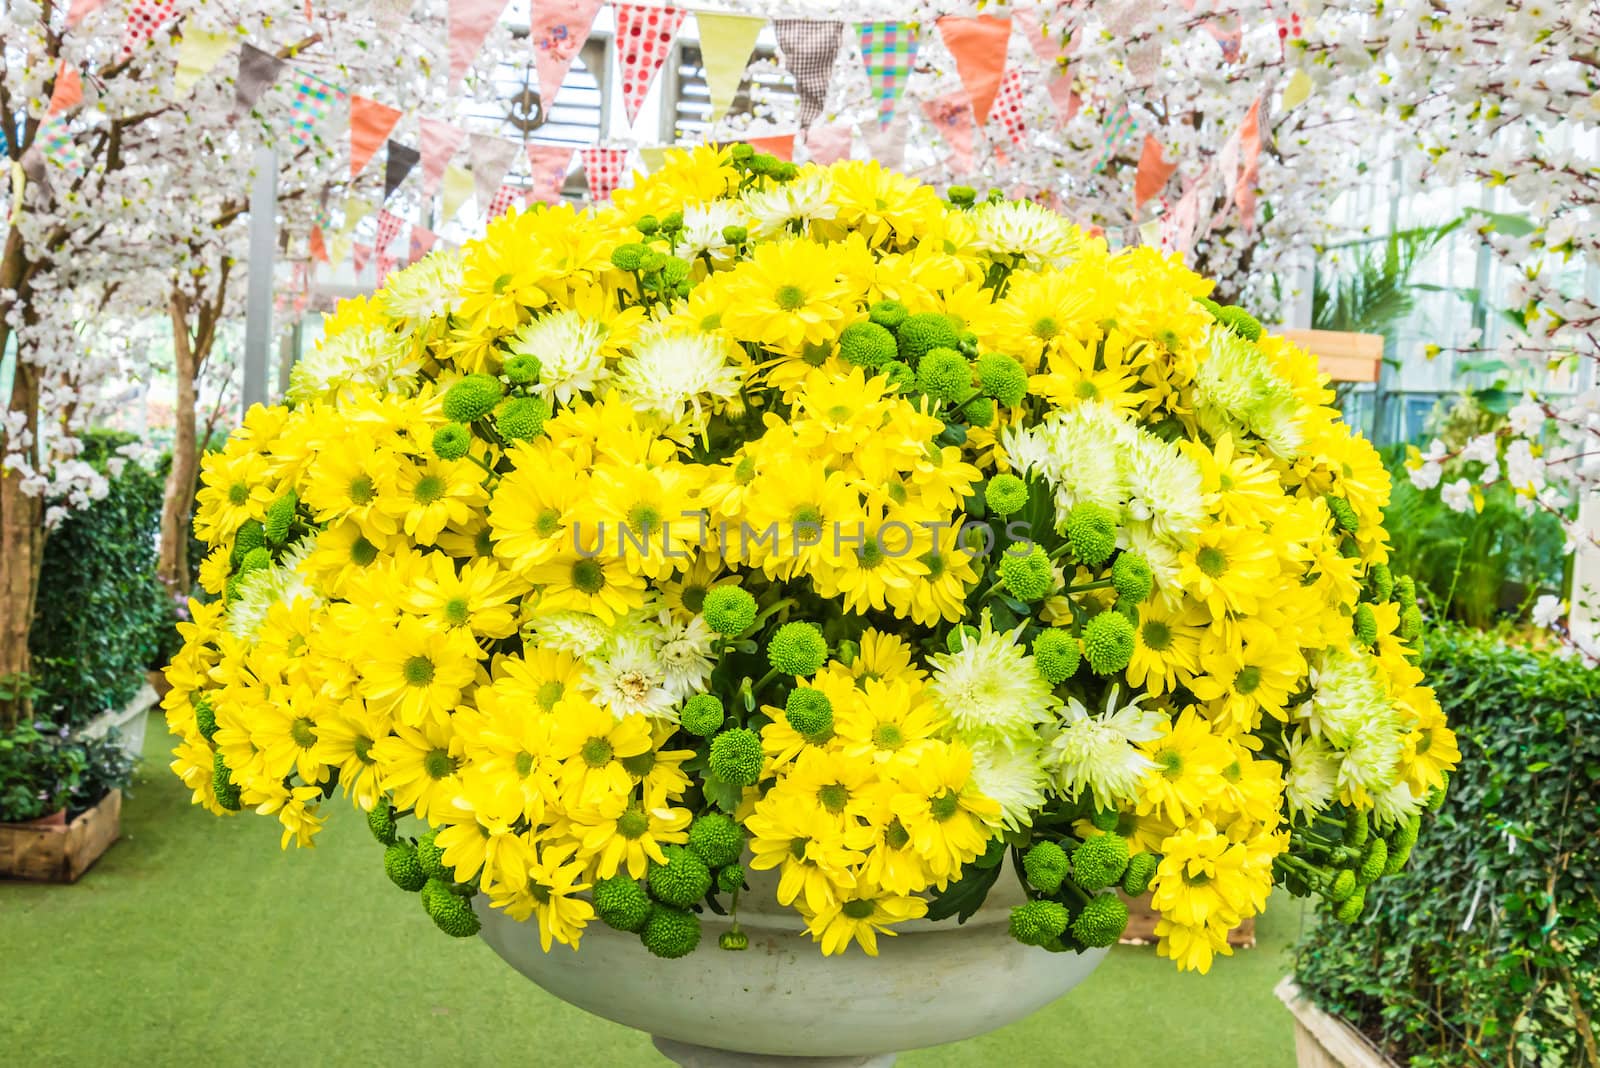 Beautiful flowers of chrysanthemums by wmitrmatr